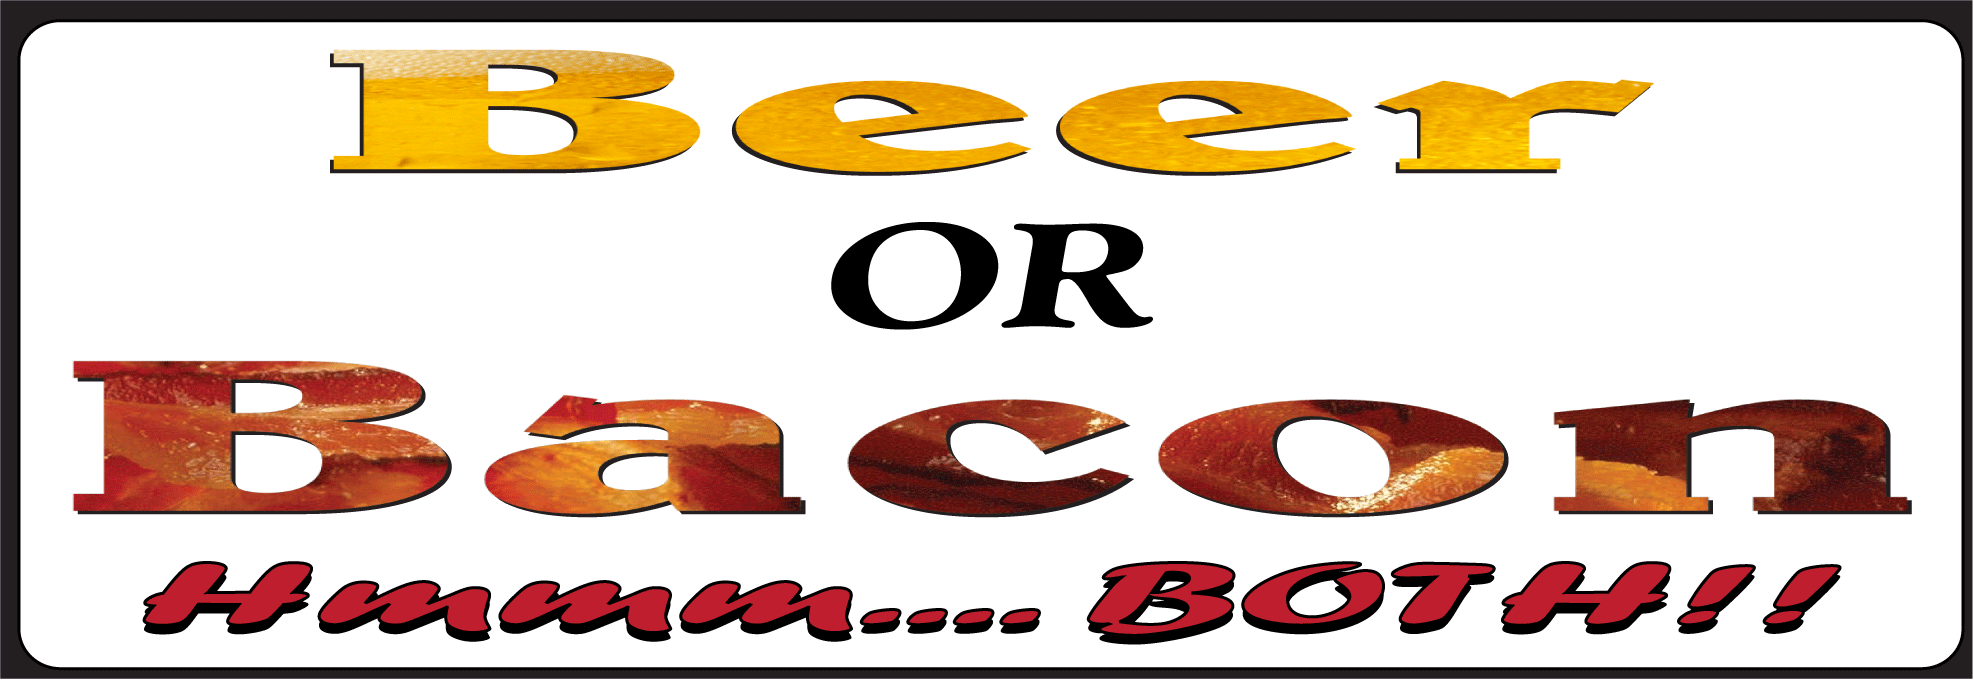 Beer or Bacon bumper sticker